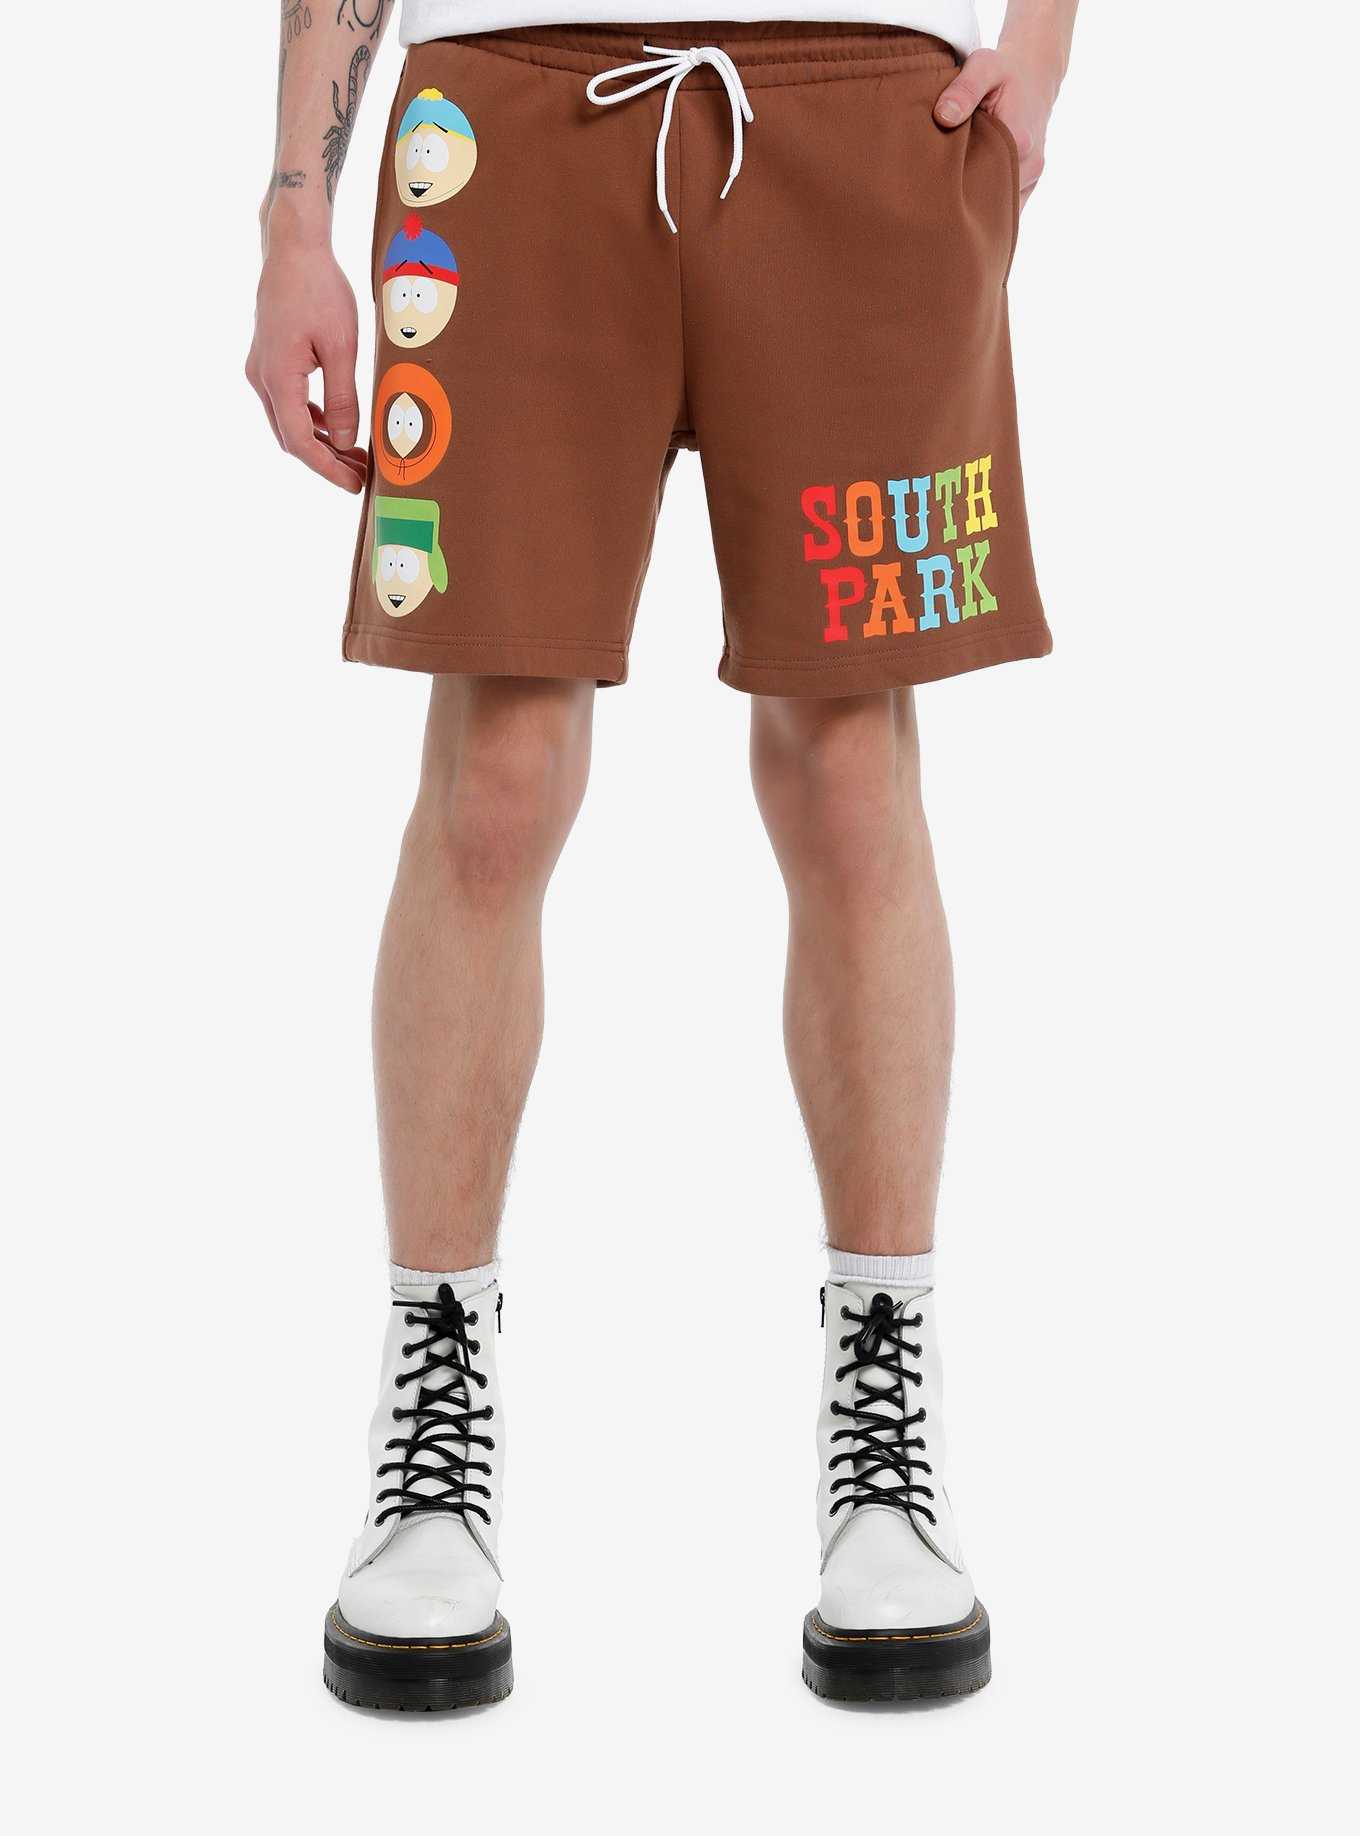 South Park Character Heads Fleece Shorts, , hi-res